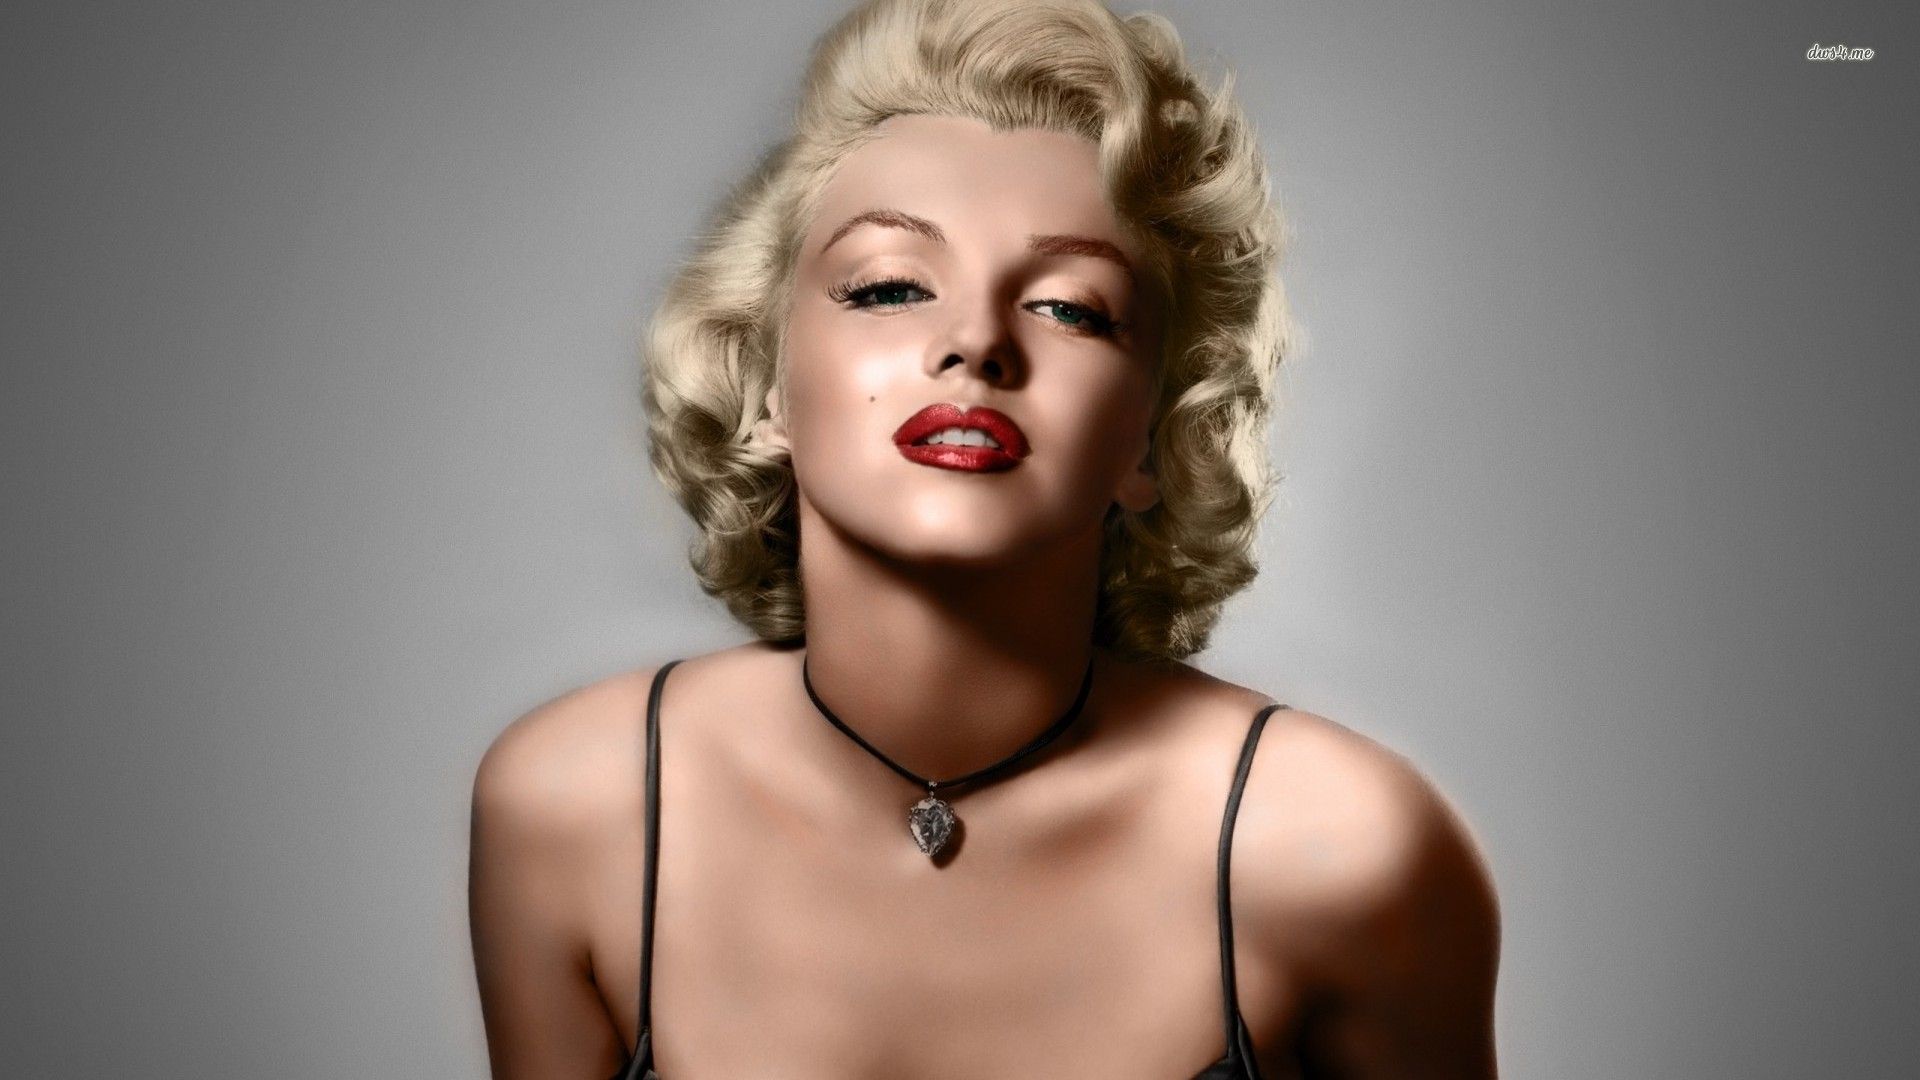 Marilyn Monroe Wallpaper Hd Your Top HD Wallpapers #ID54529